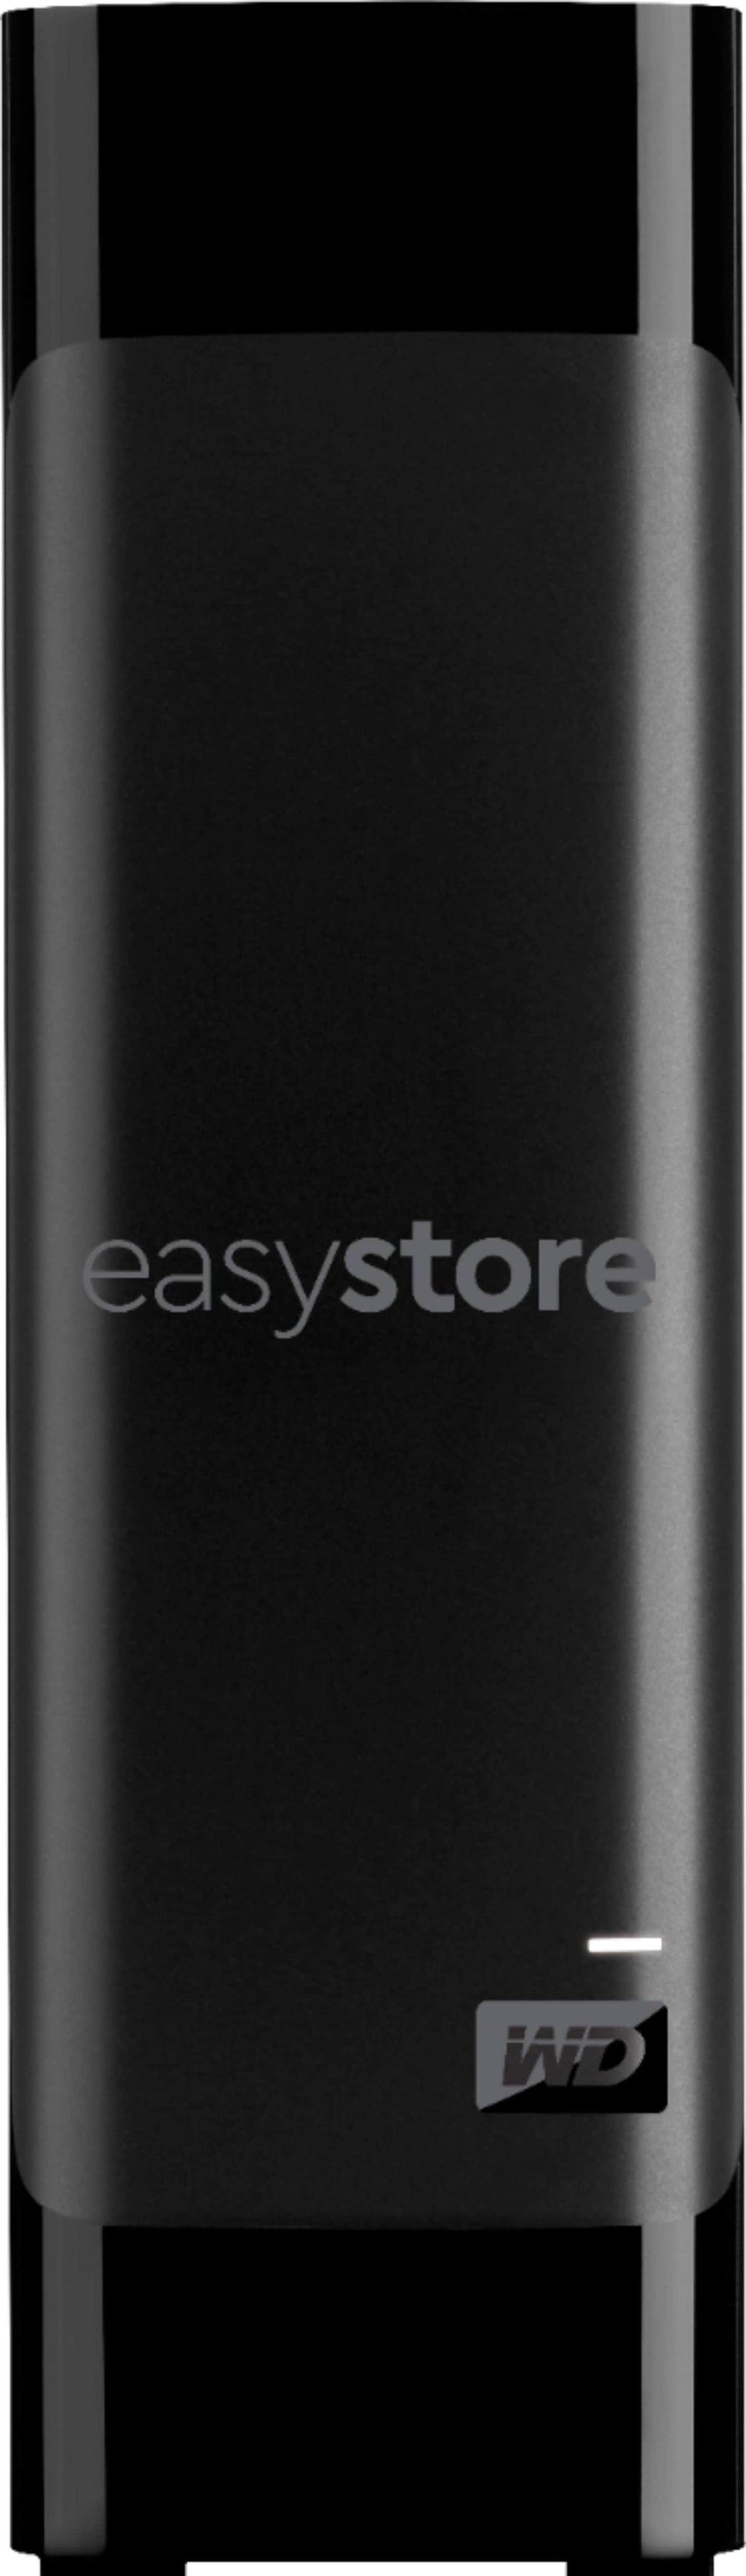 WD - easystore 8TB External USB 3.0 Hard Drive - Black_0